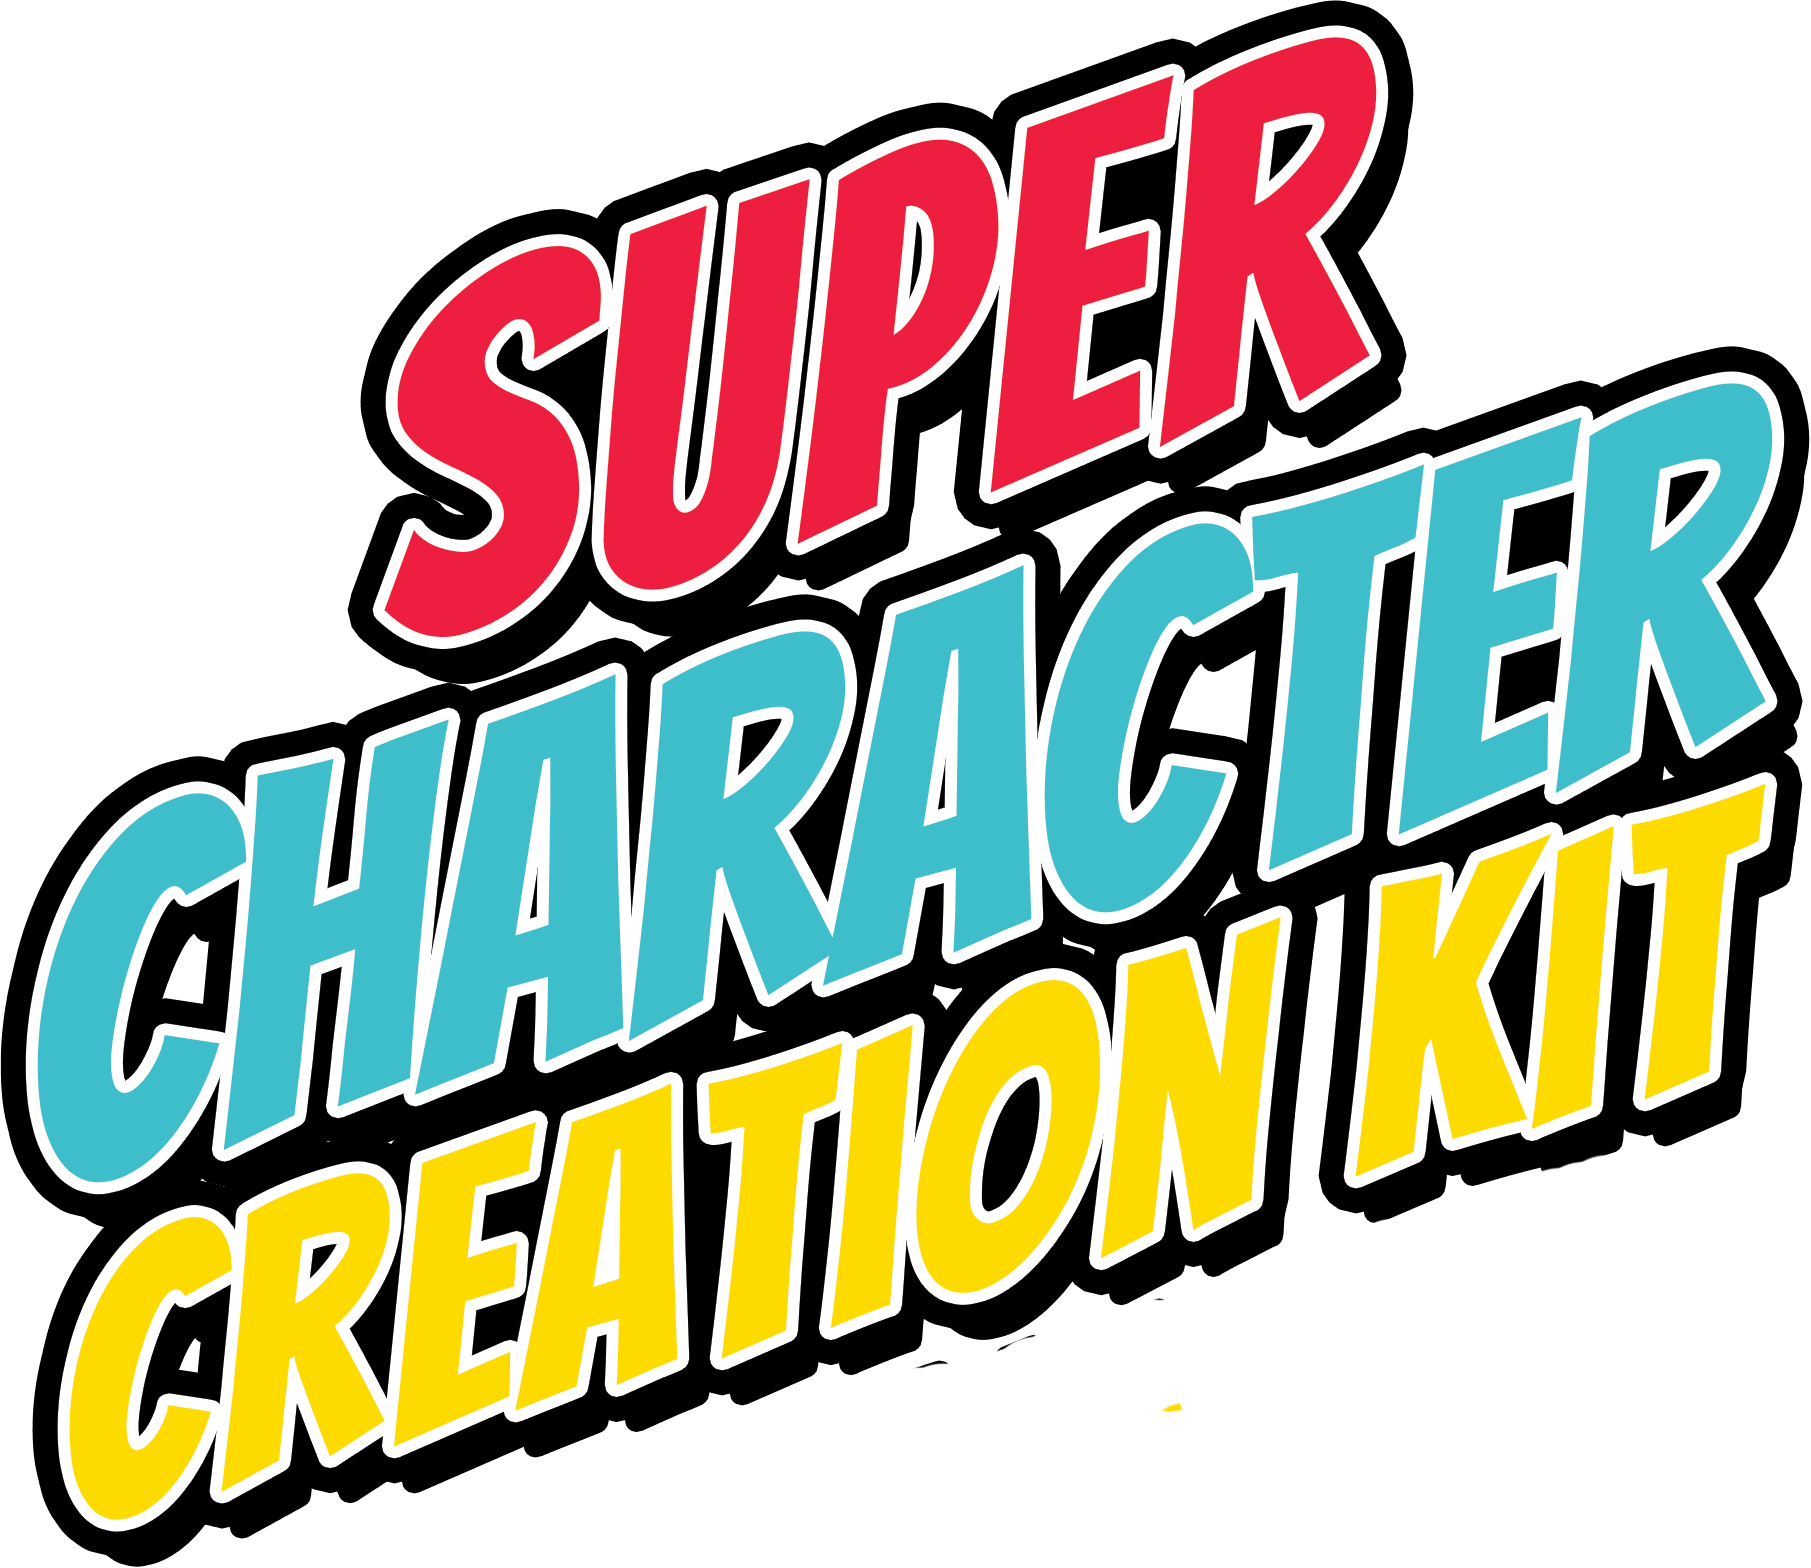 Super character creation kit